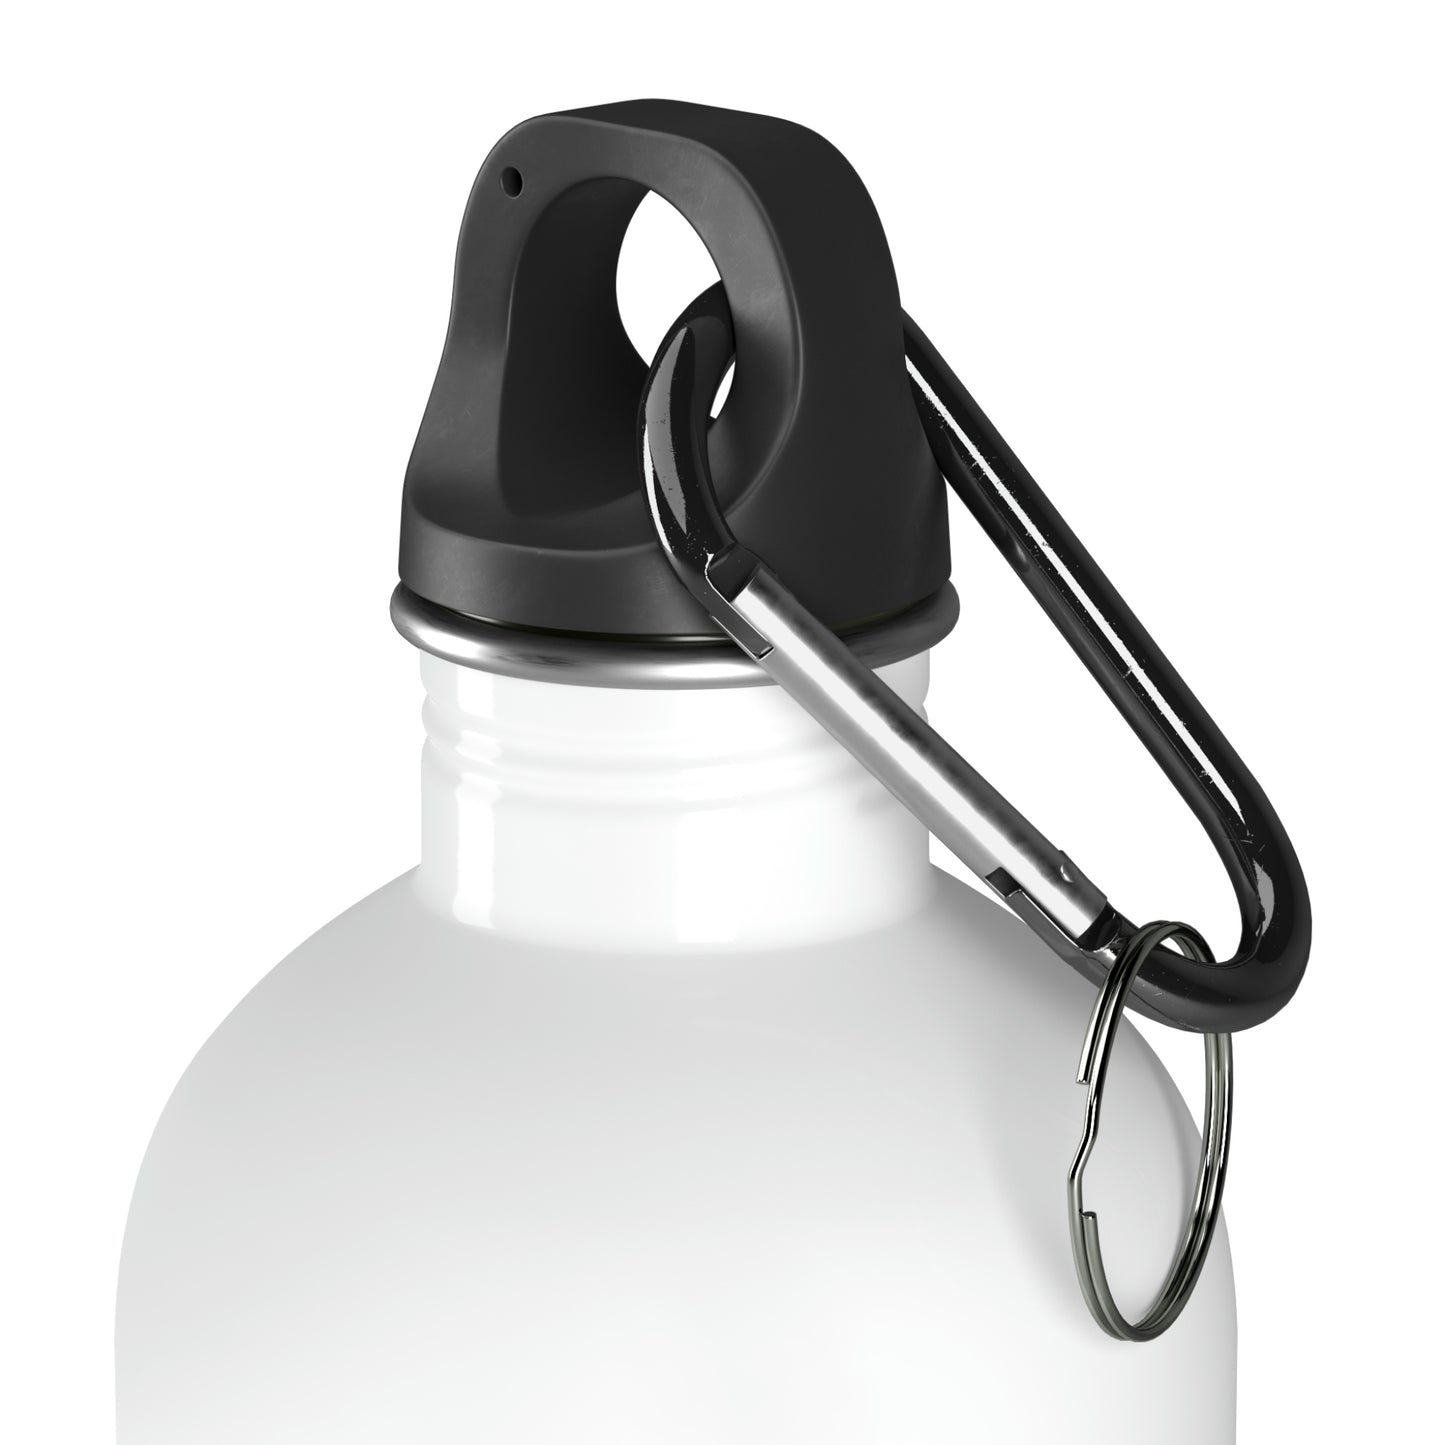 Horse Hugs - Stainless Steel Water Bottle